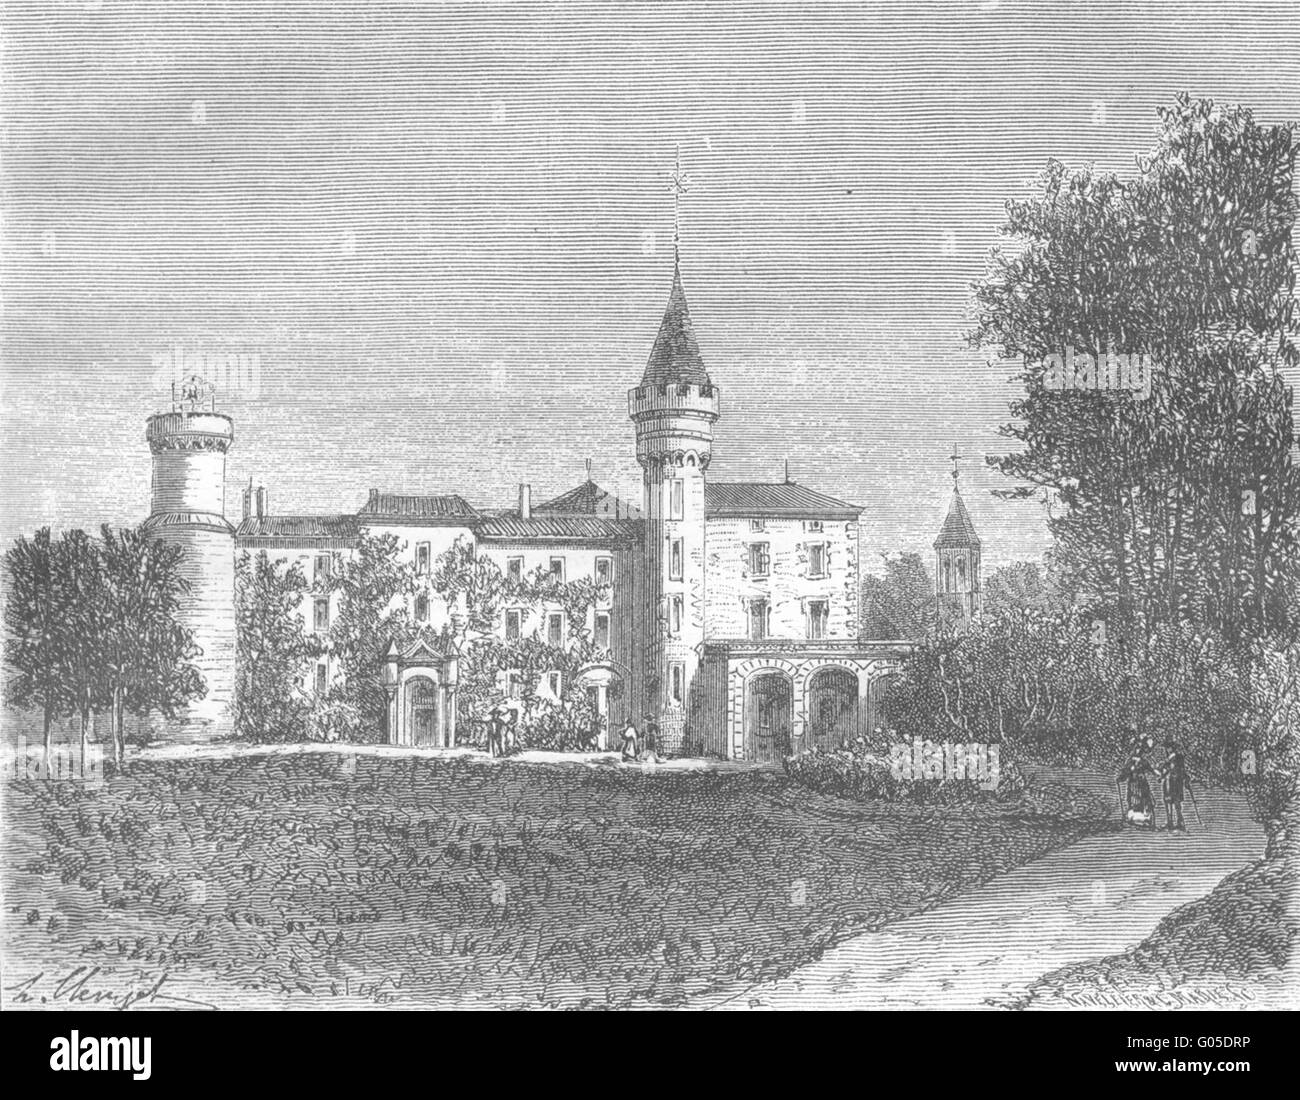 SAONE ET LOIRE: Saone-: Chateau Lamartine, St-Point, antique print 1883 Stock Photo